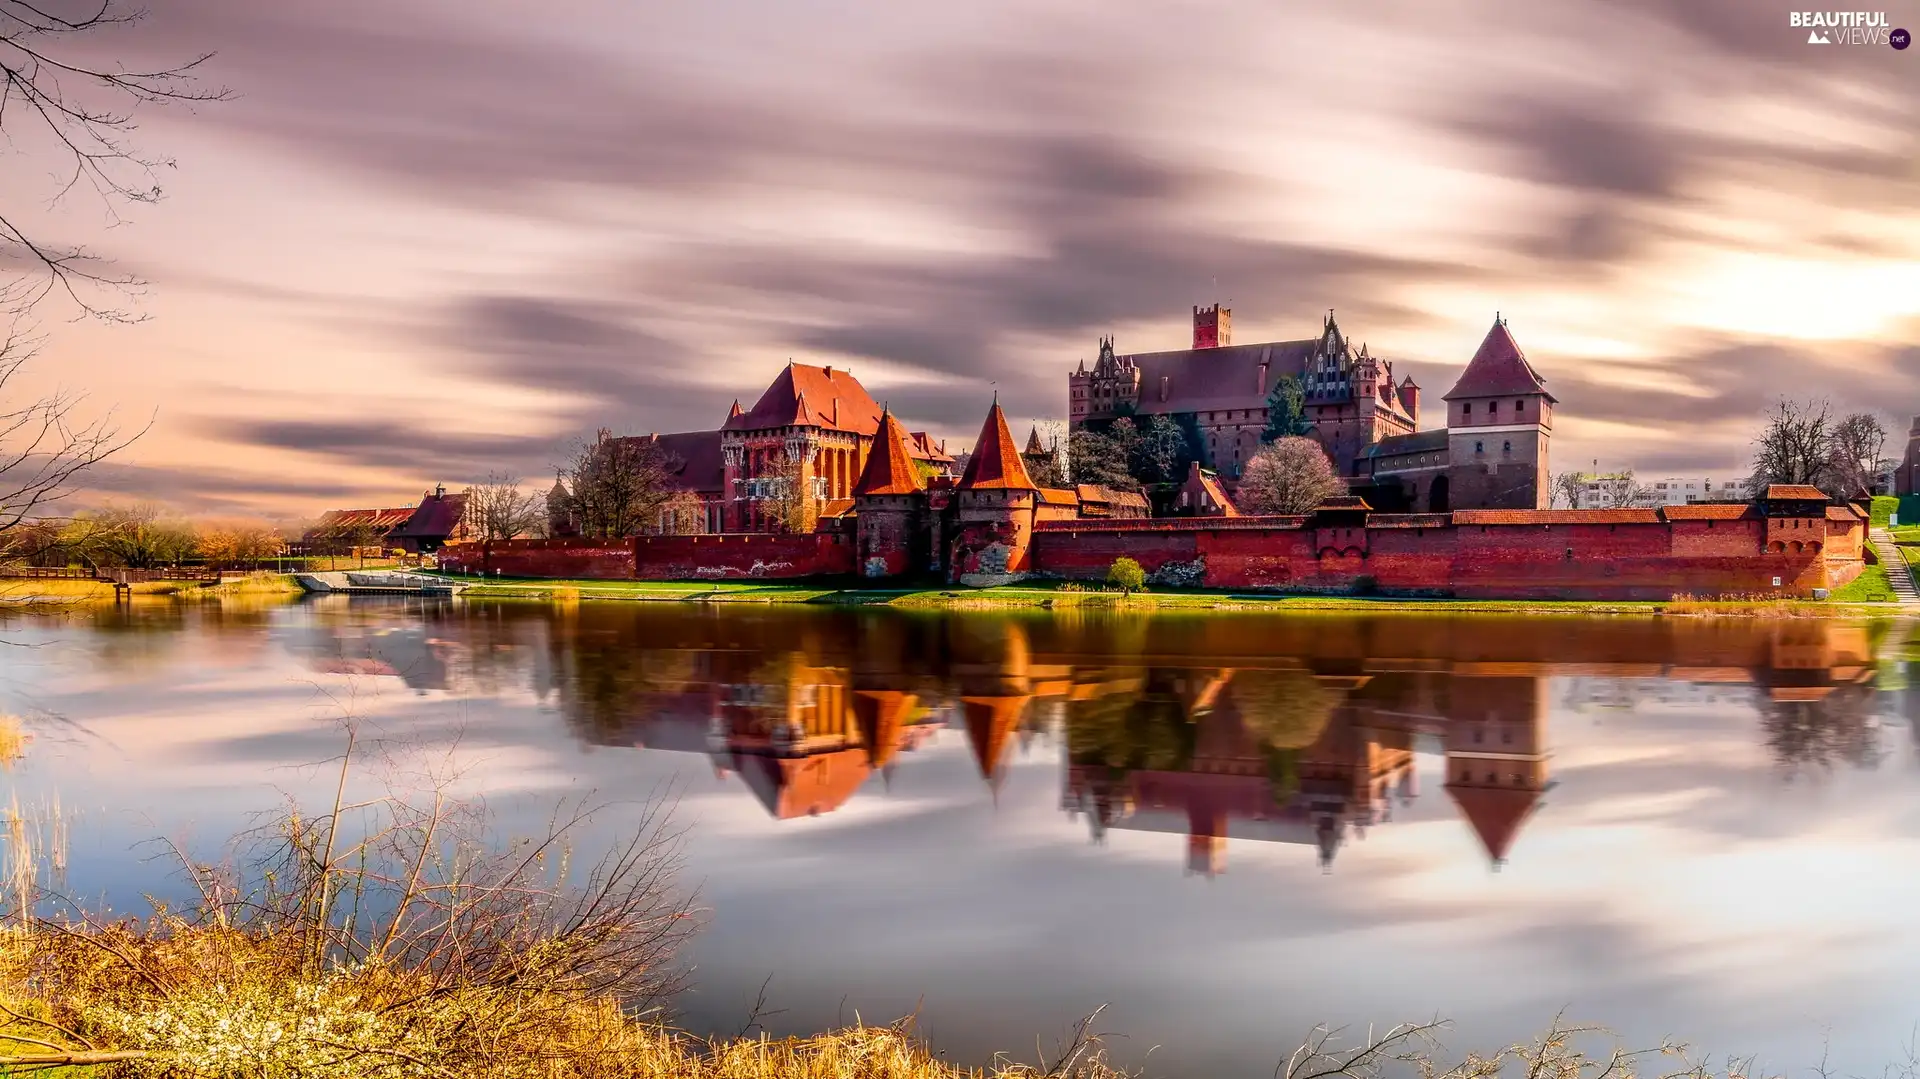 Nogat River, Teutonic, Malbork, Monument, Malbork Castle, reflection, Poland